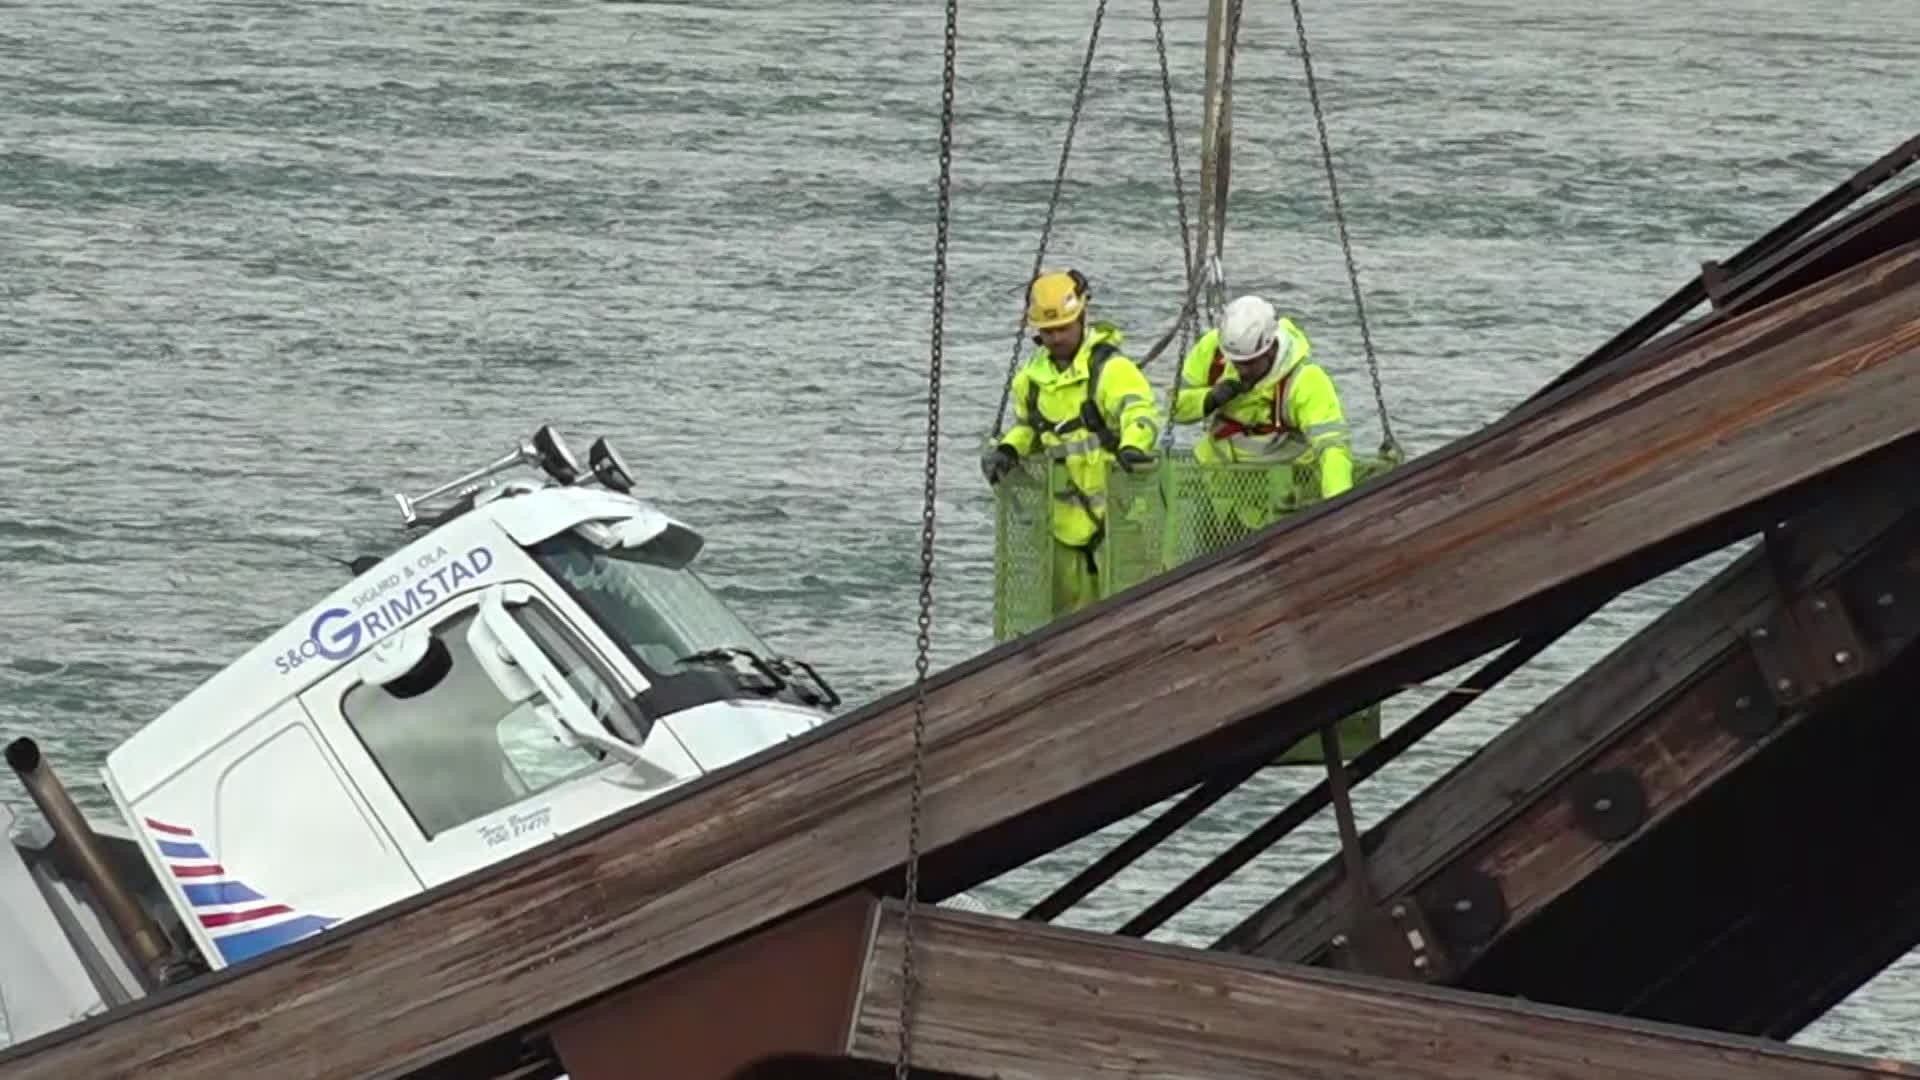 Truck rescued from bridge - NRK Innlandet - Local news, TV and radio